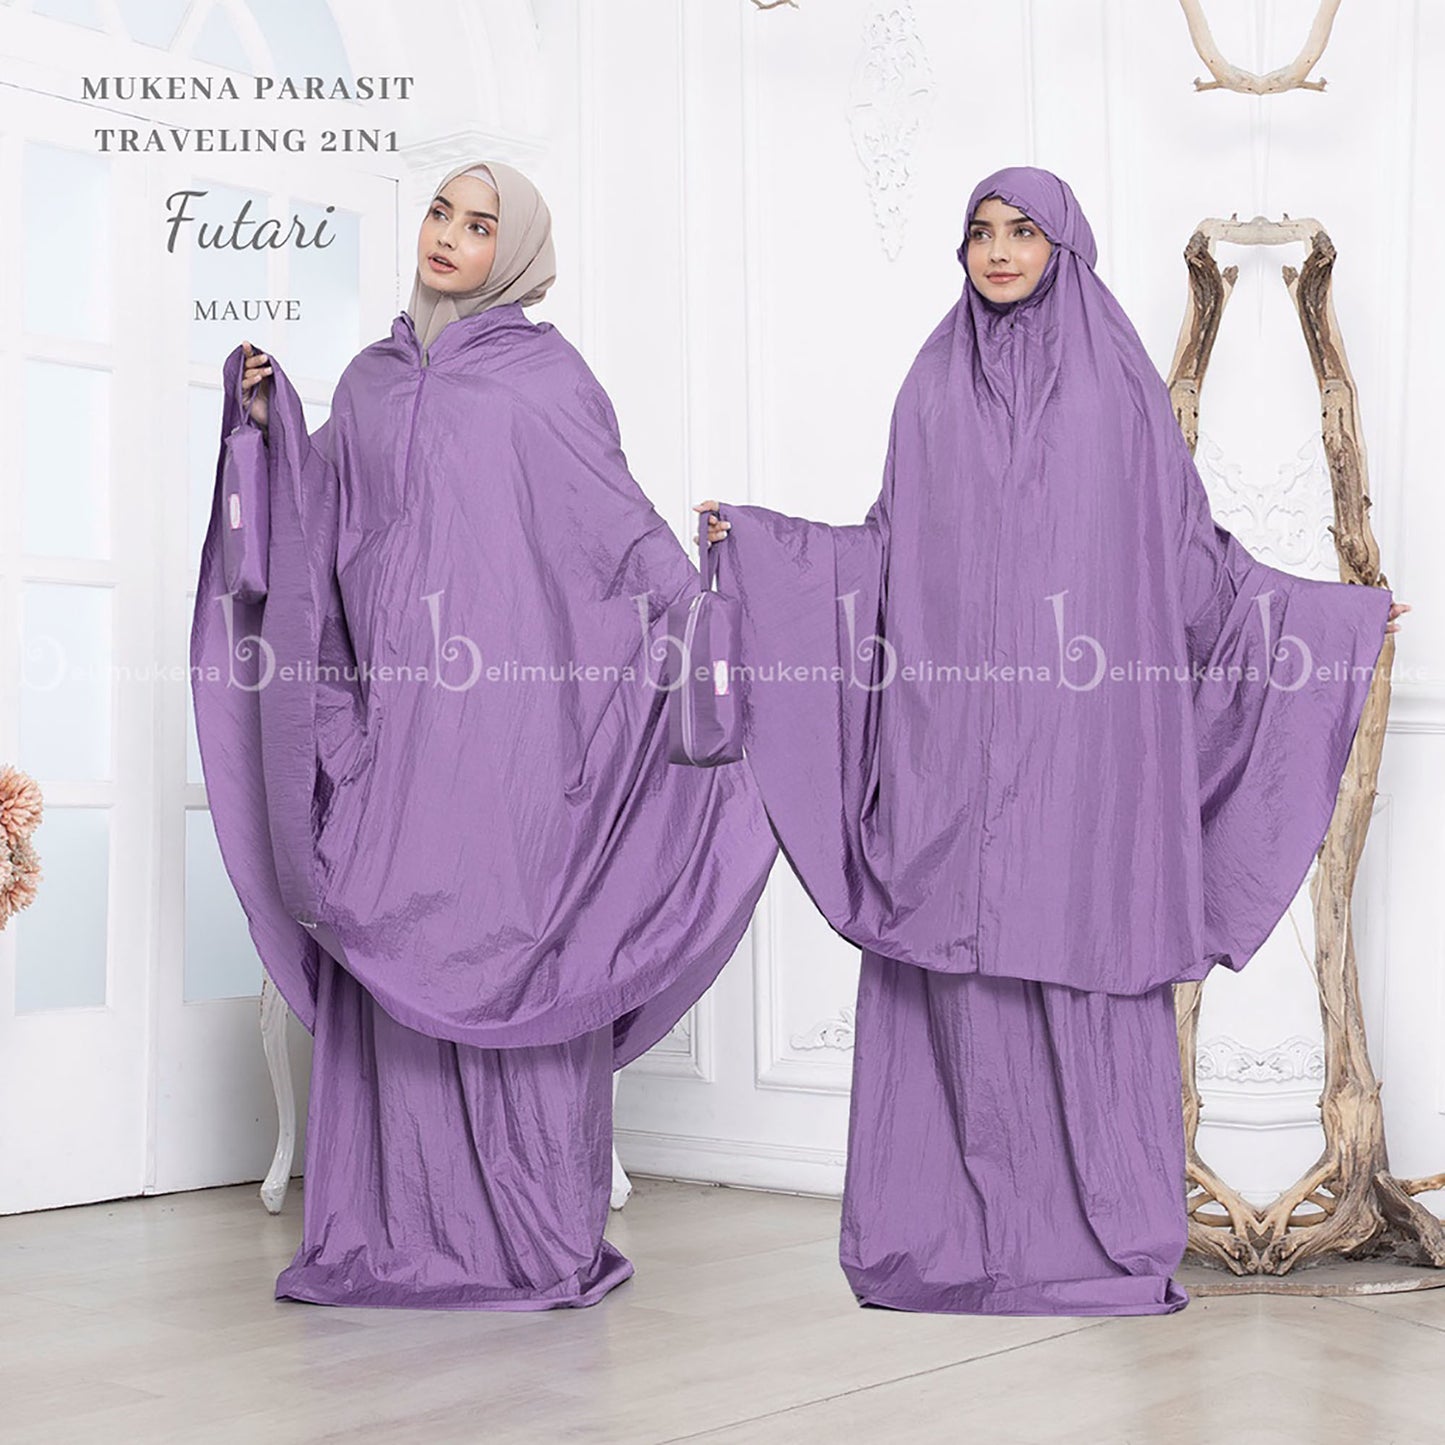 Premium Travel 2in1 Futari Plain Parachute Adult Mukena Muslim Prayer Dress